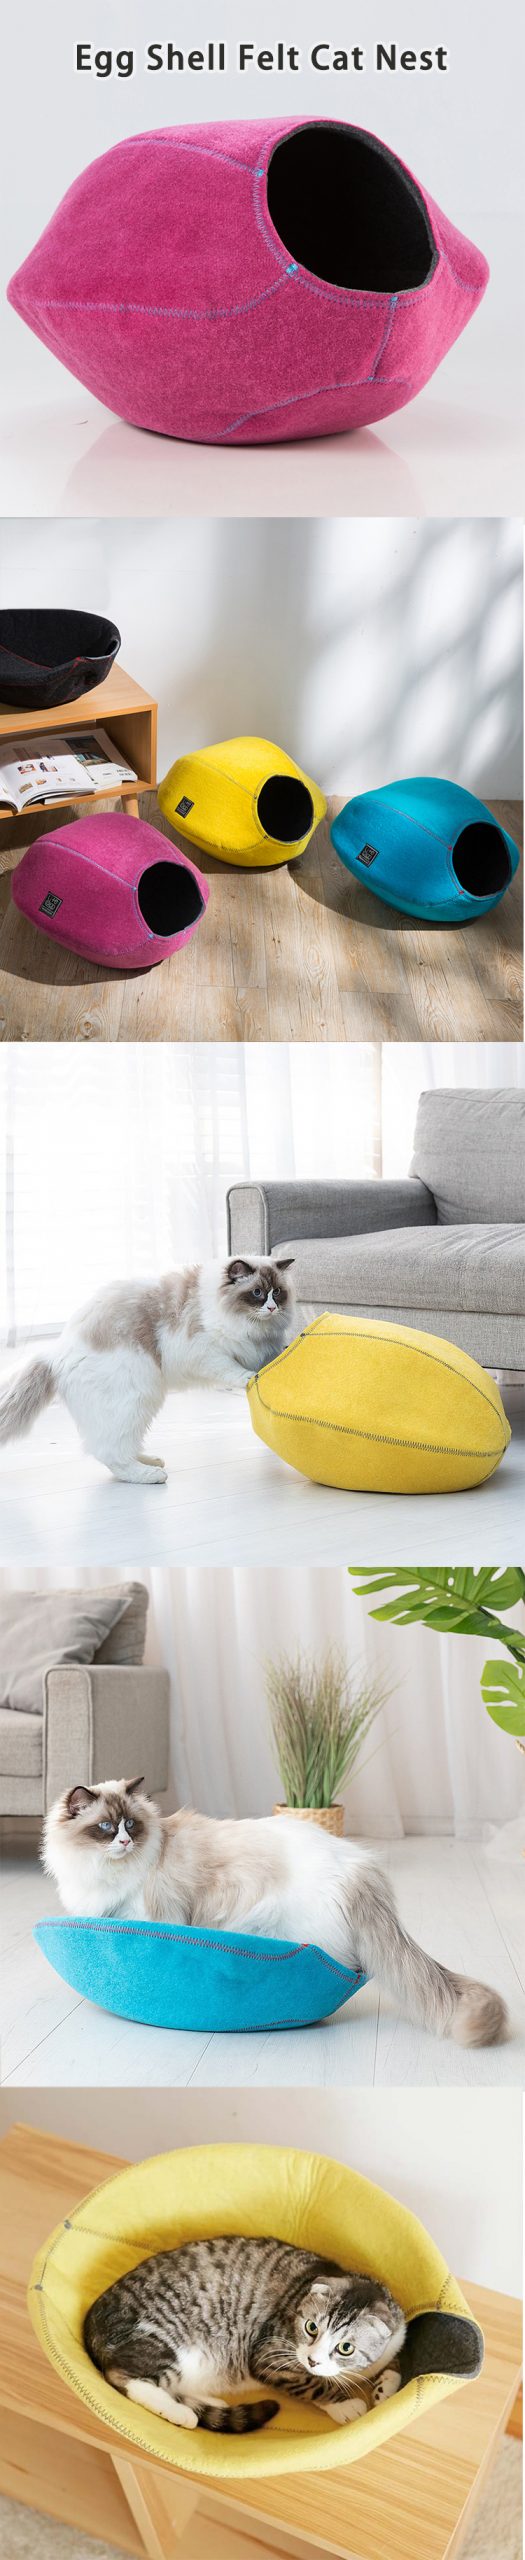 Semi-Closed Egg Shell Custom Pet House Comfortable Felt Cat Nest -PS0124